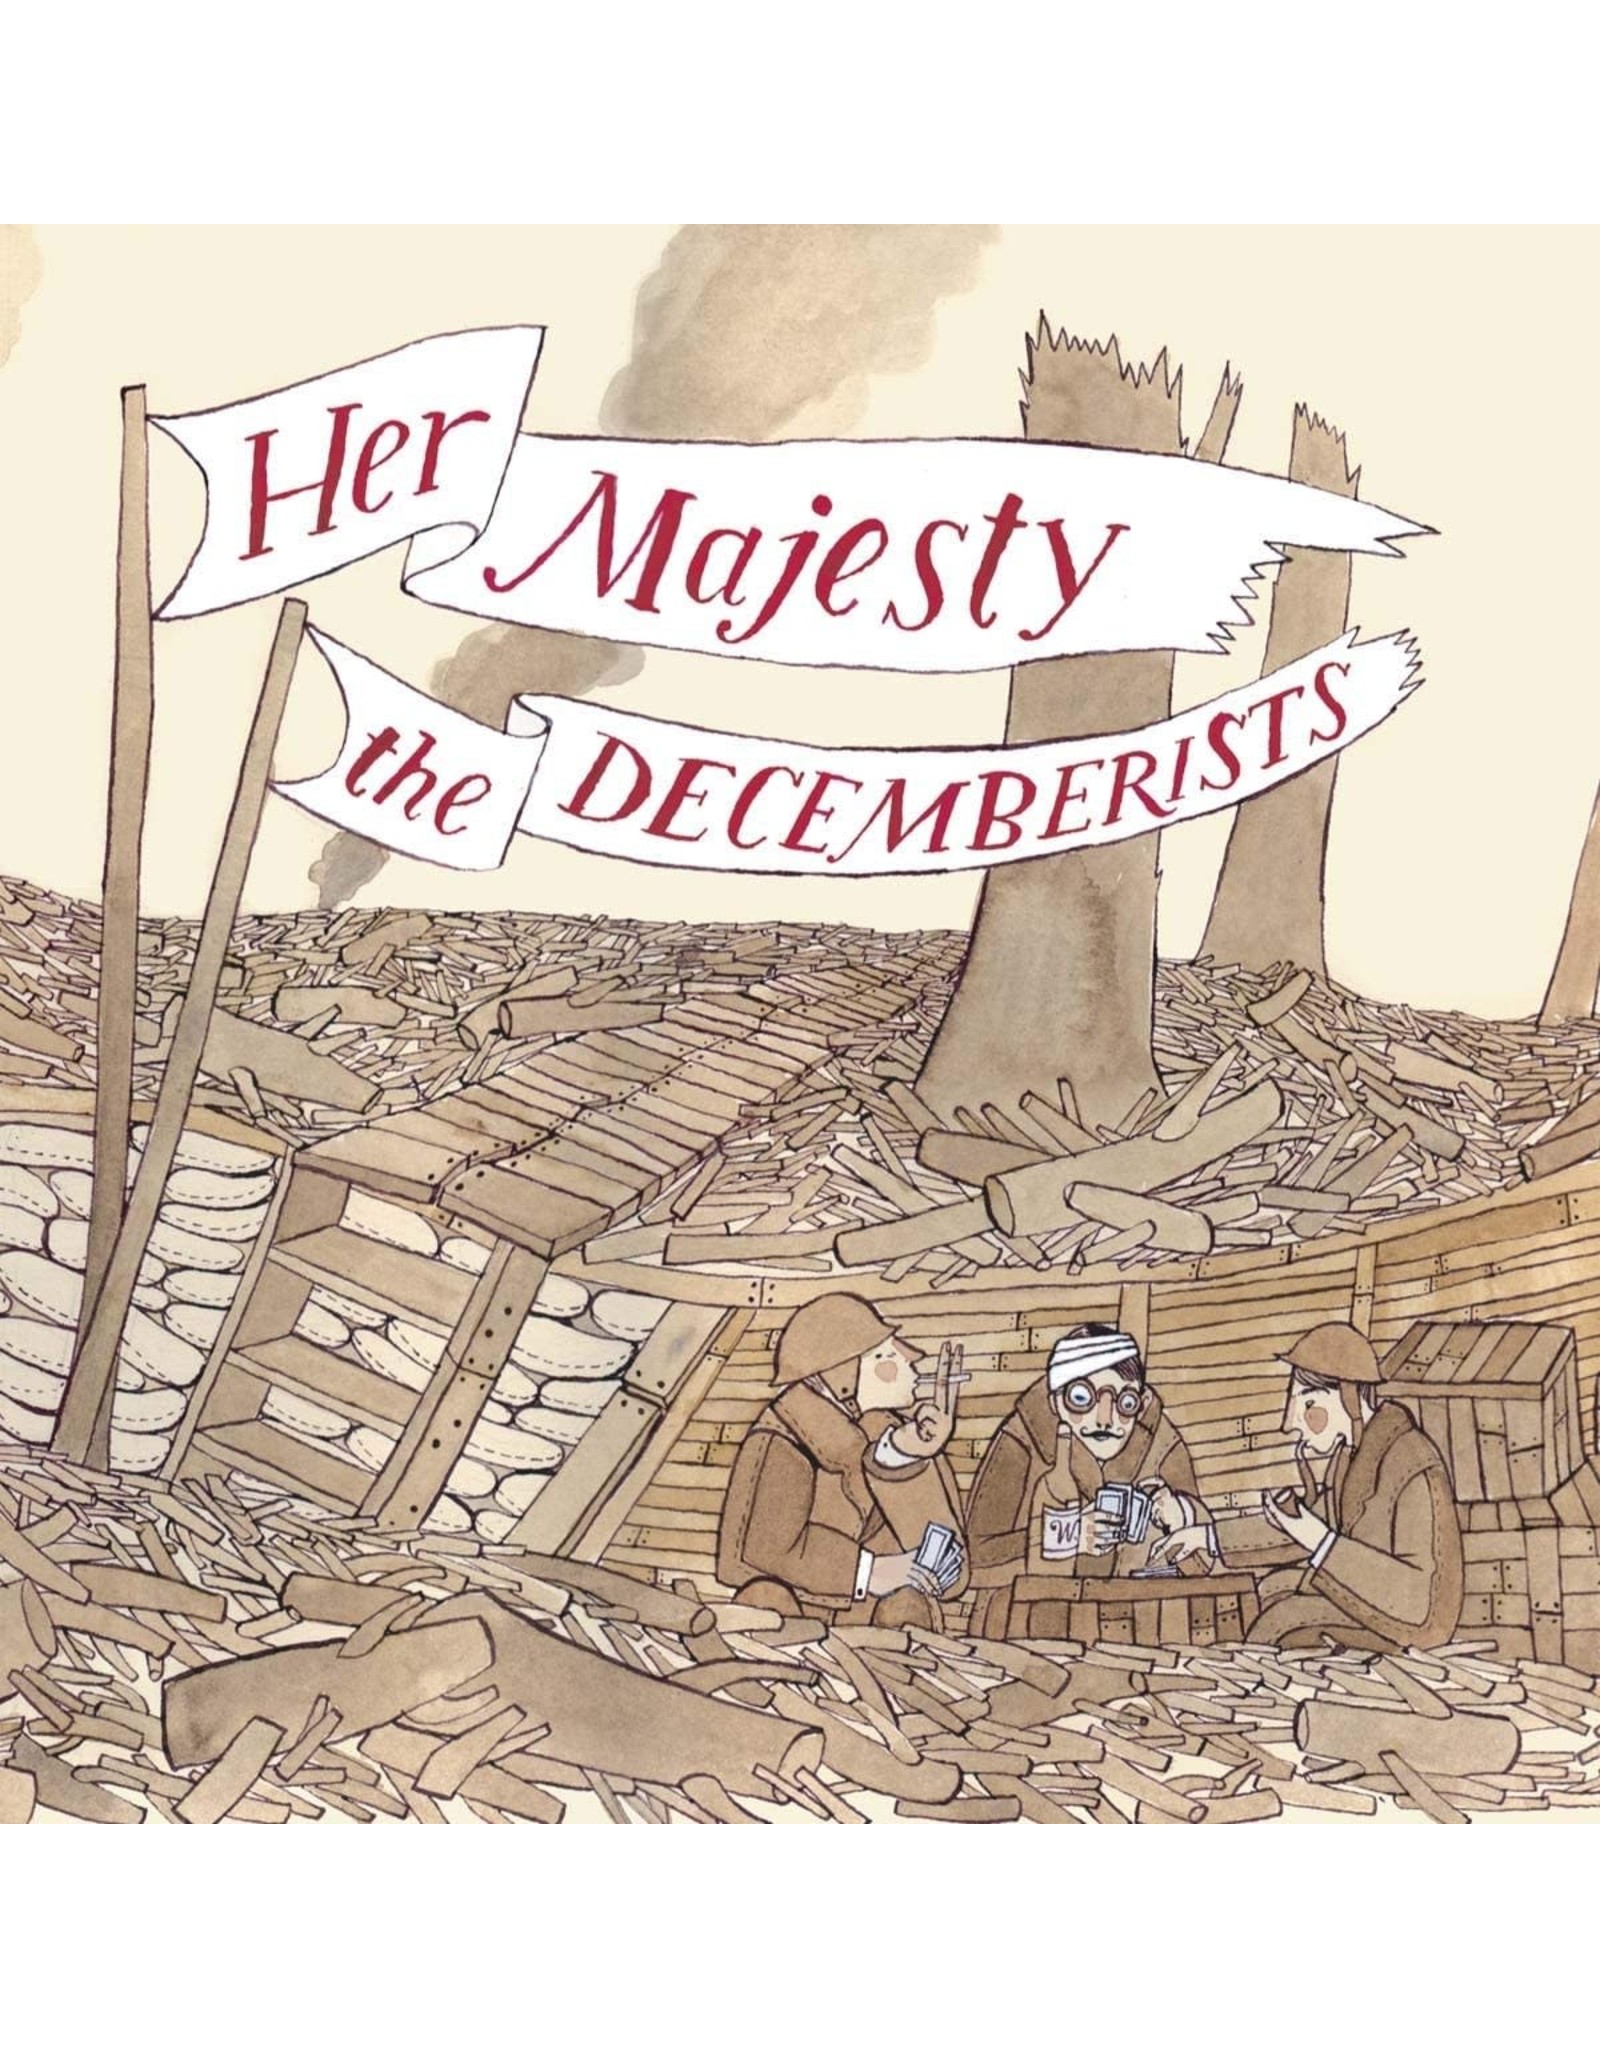 Decemberists - Her Majesty (Exclusive Blue Vinyl)